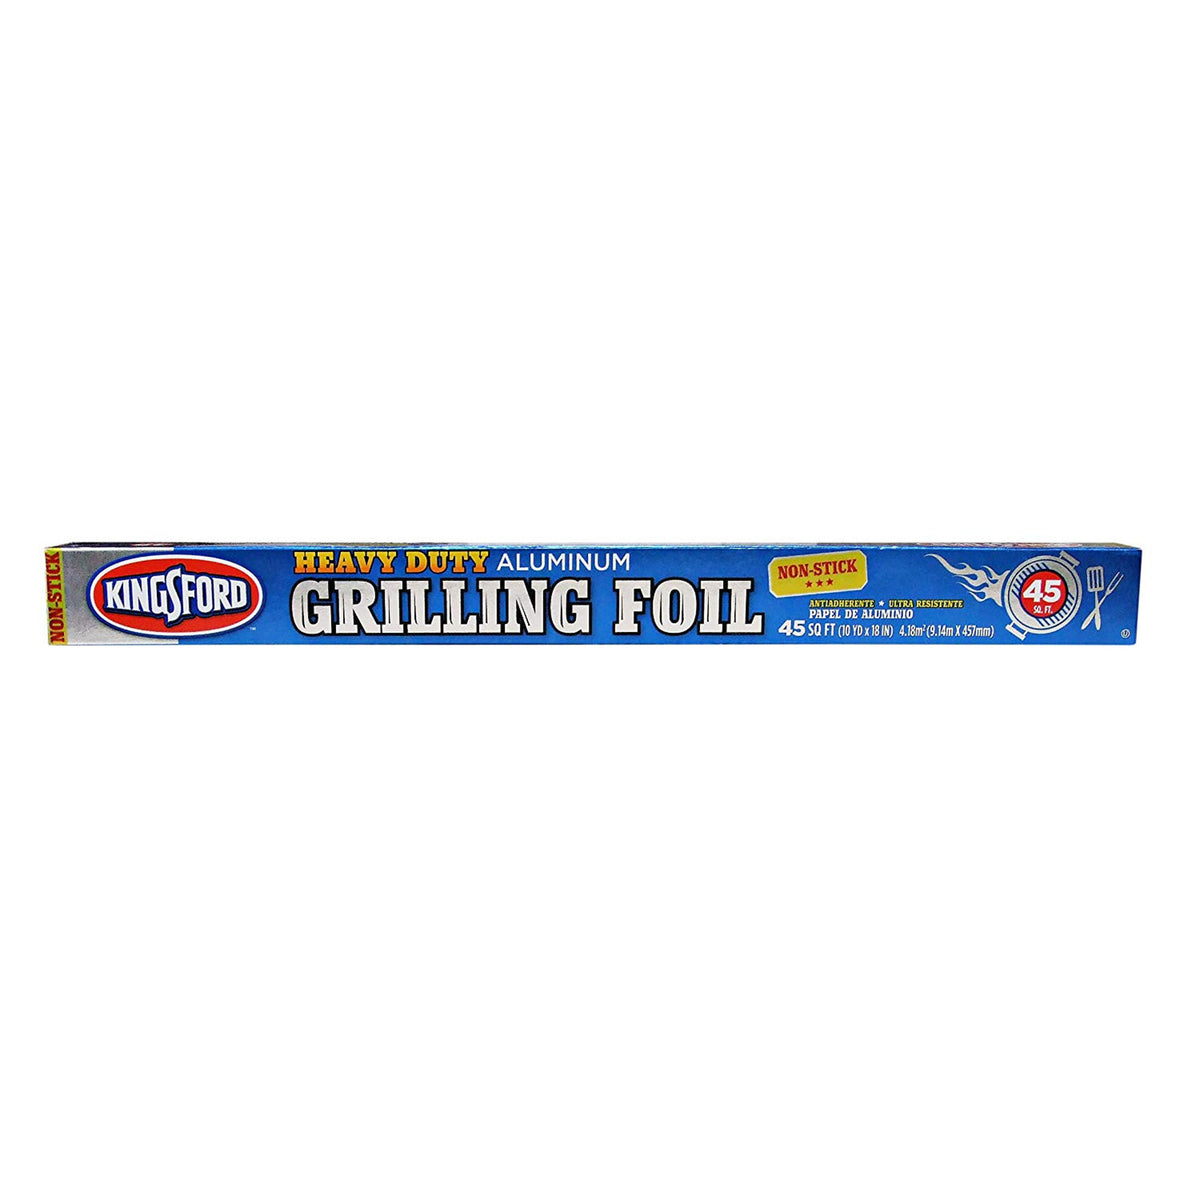 Grilling foil